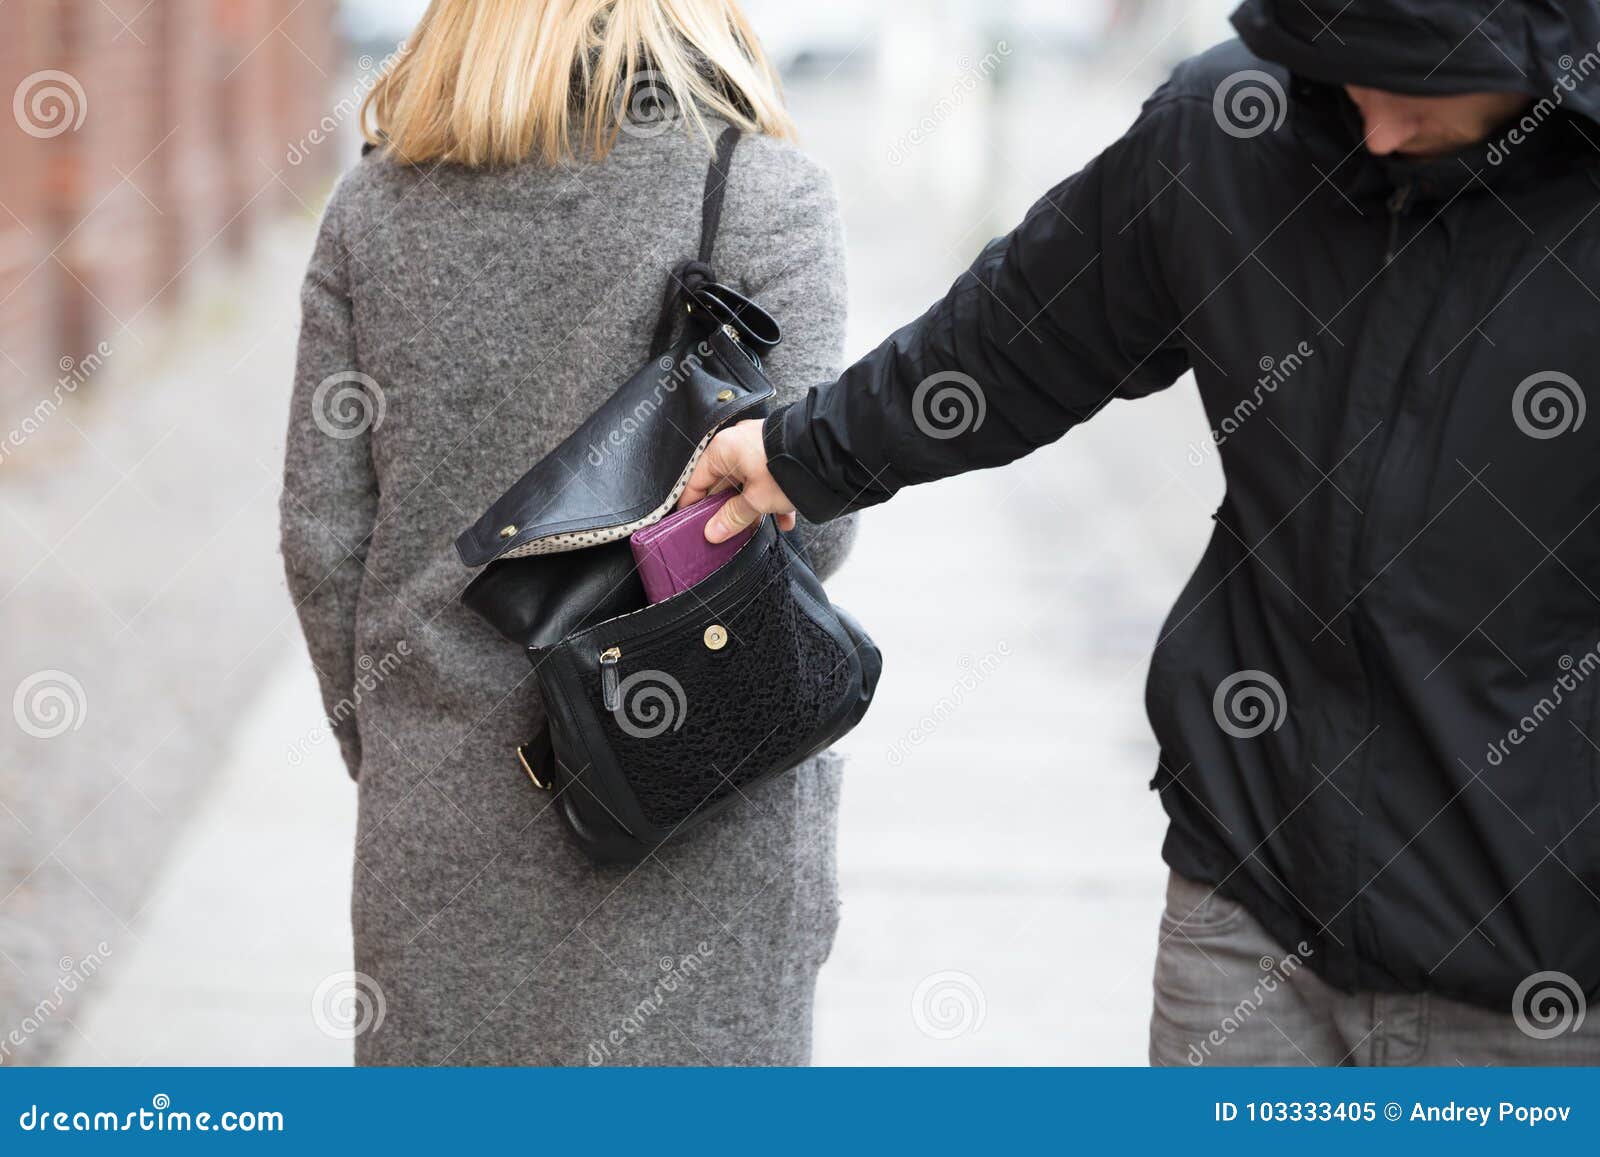 person stealing purse from handbag